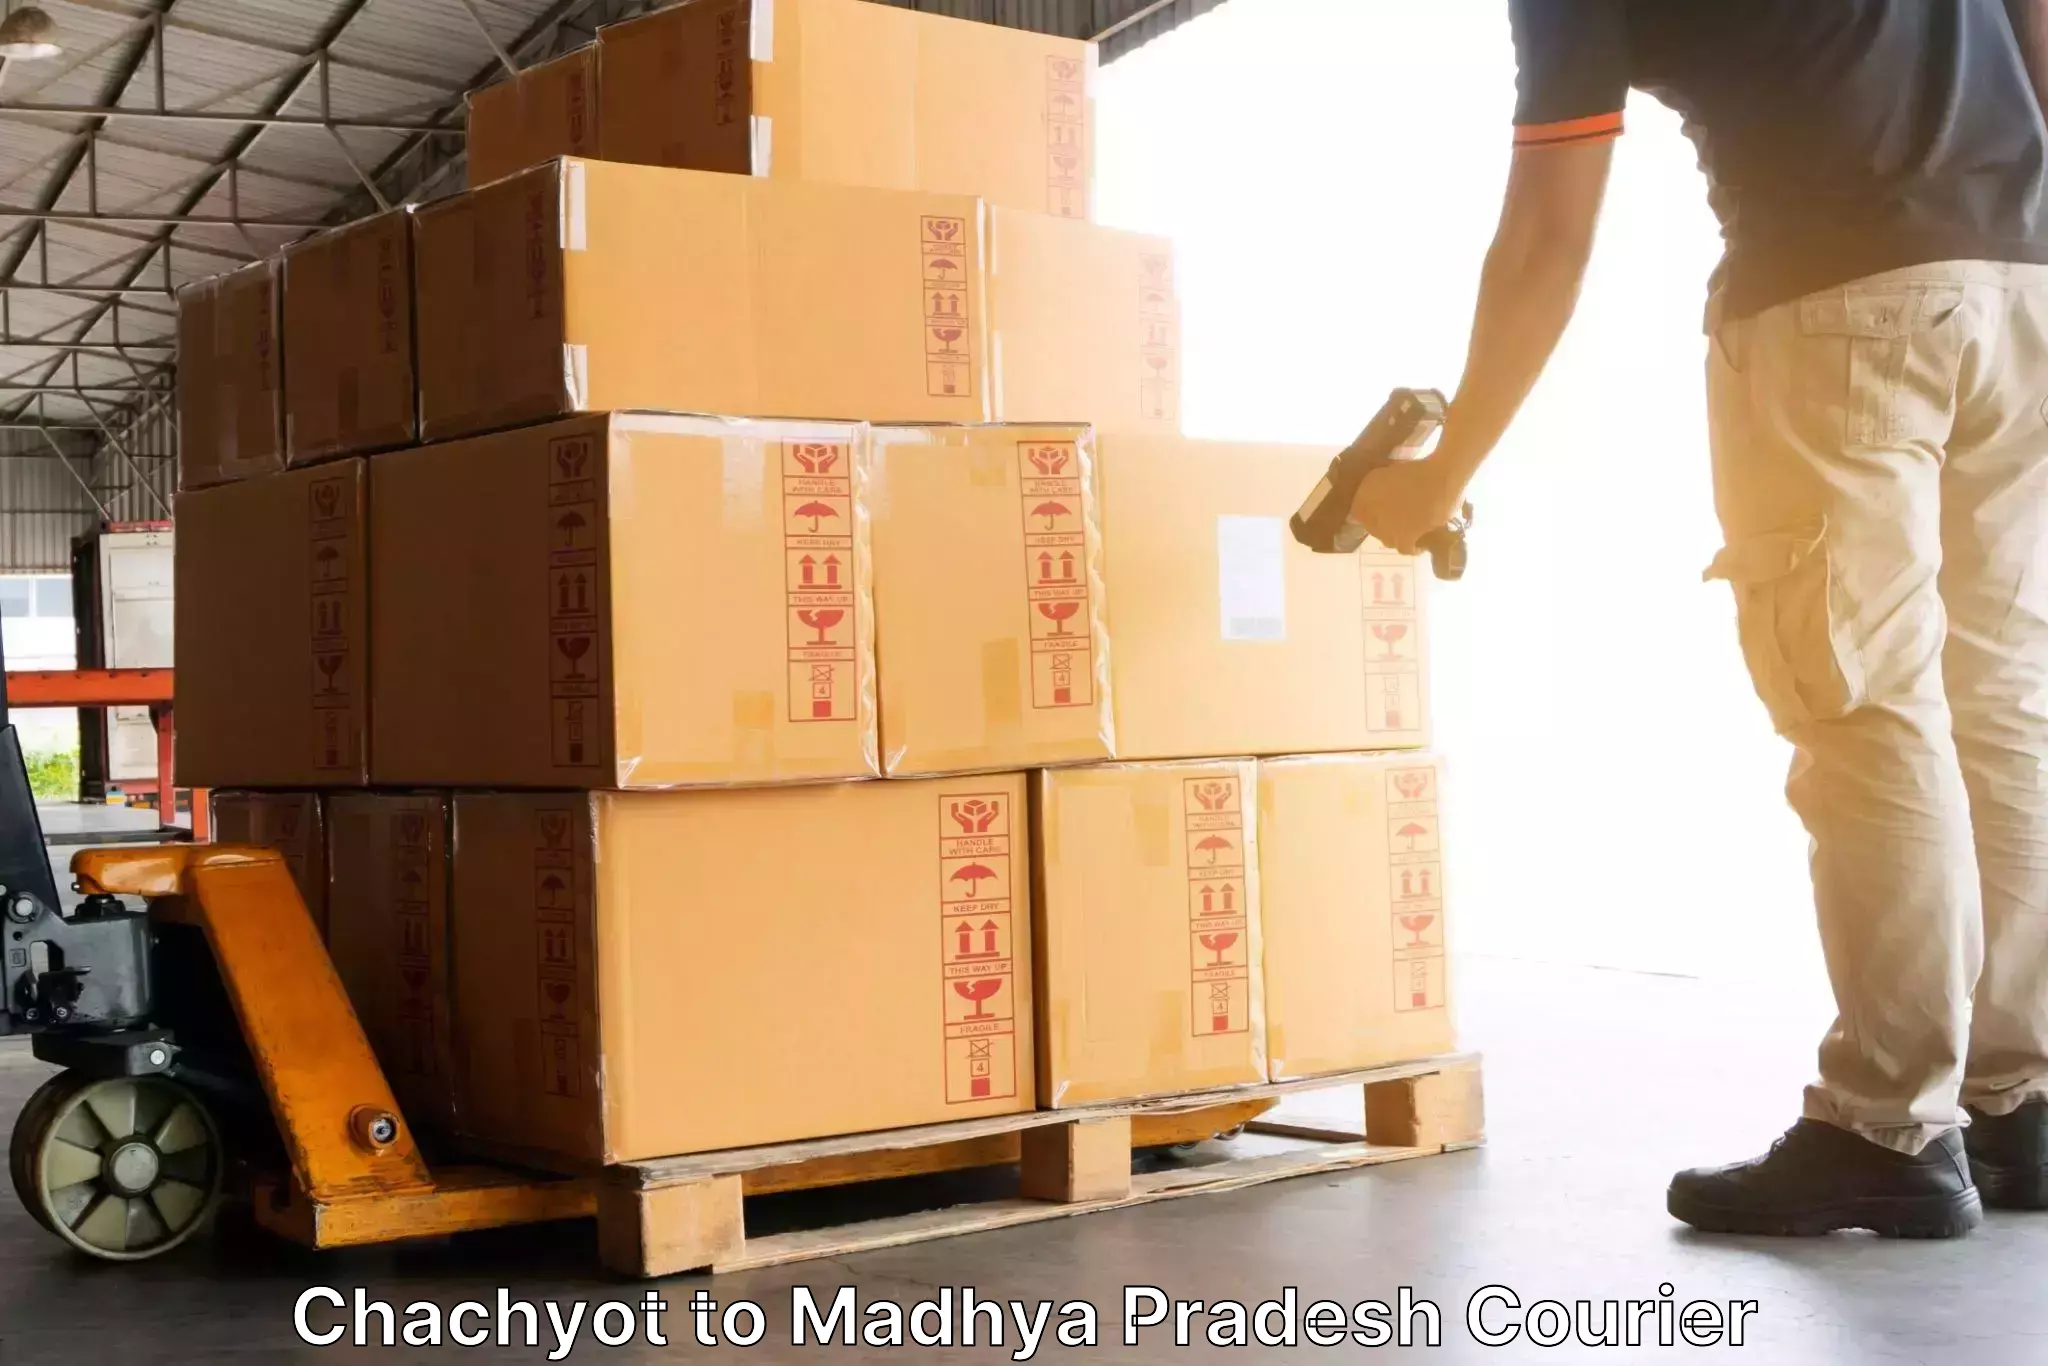 Express package handling Chachyot to Madhya Pradesh